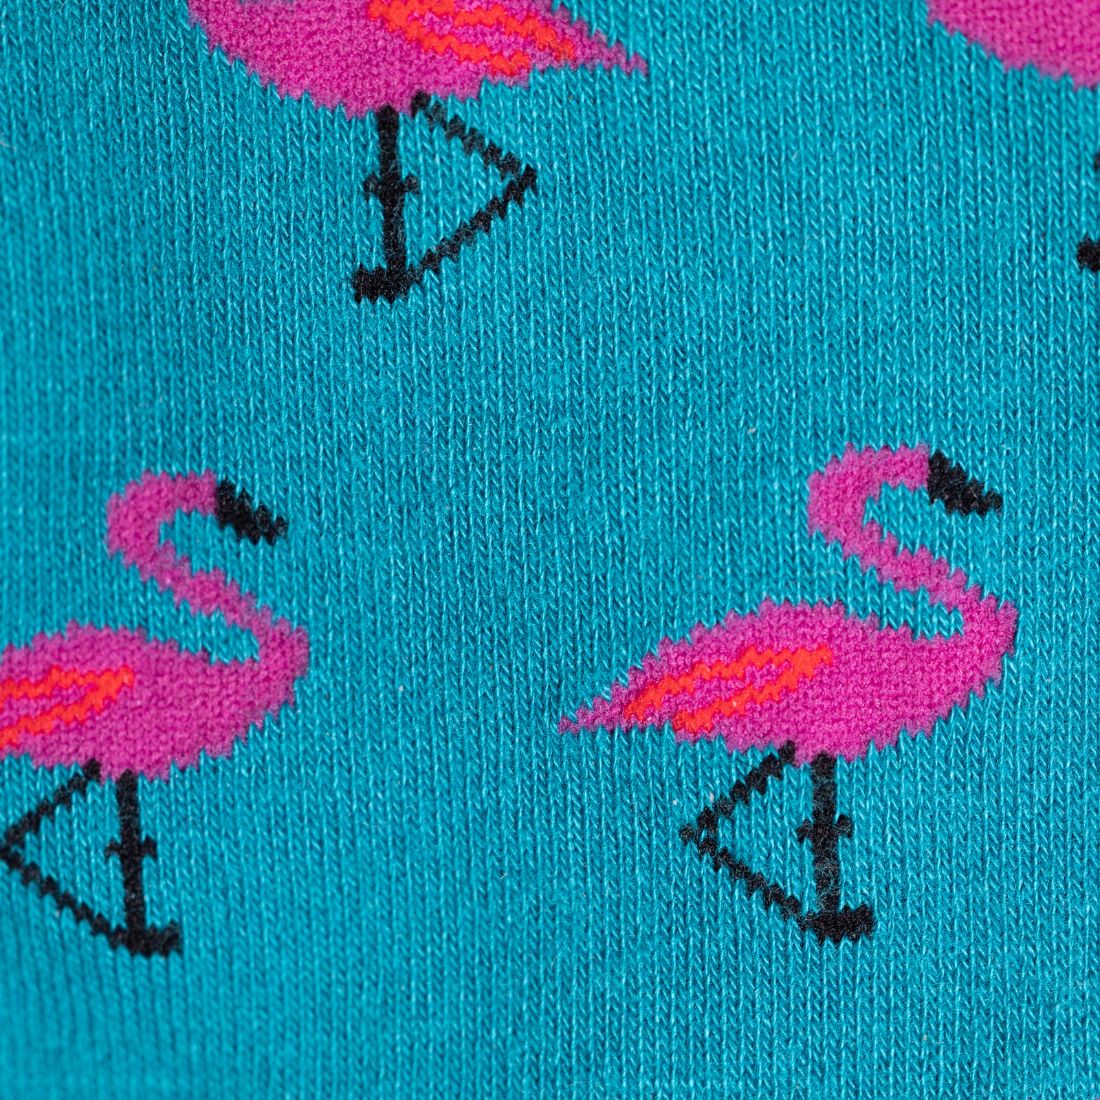 Flamingo Bamboo Socks